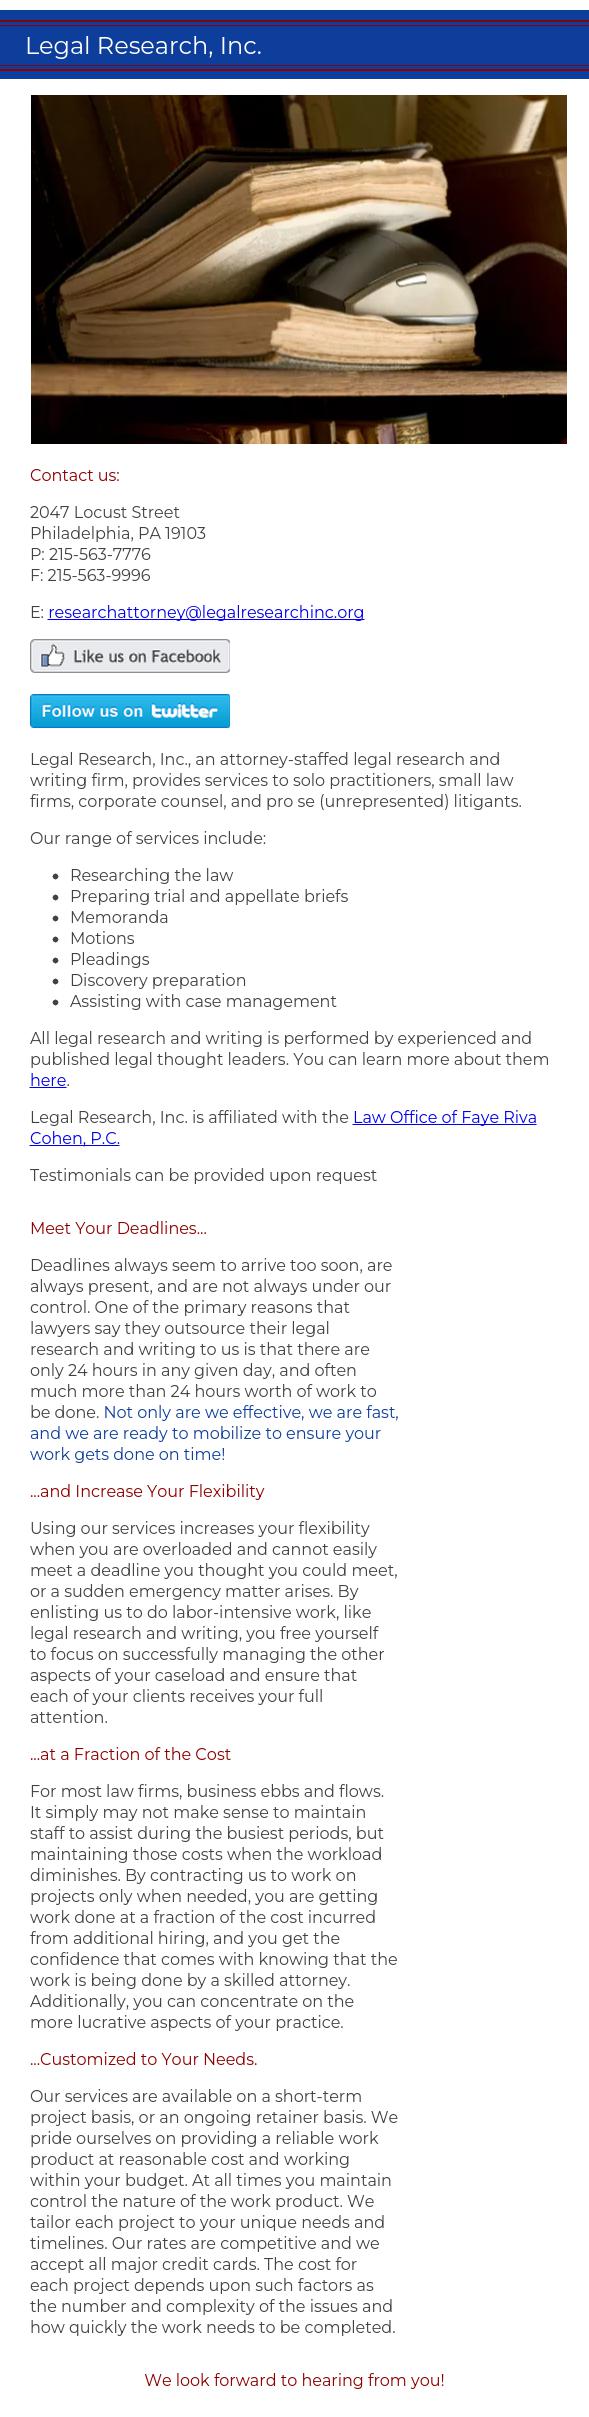 The Law Office of Faye Riva Cohen, P.C. - Philadelphia PA Lawyers